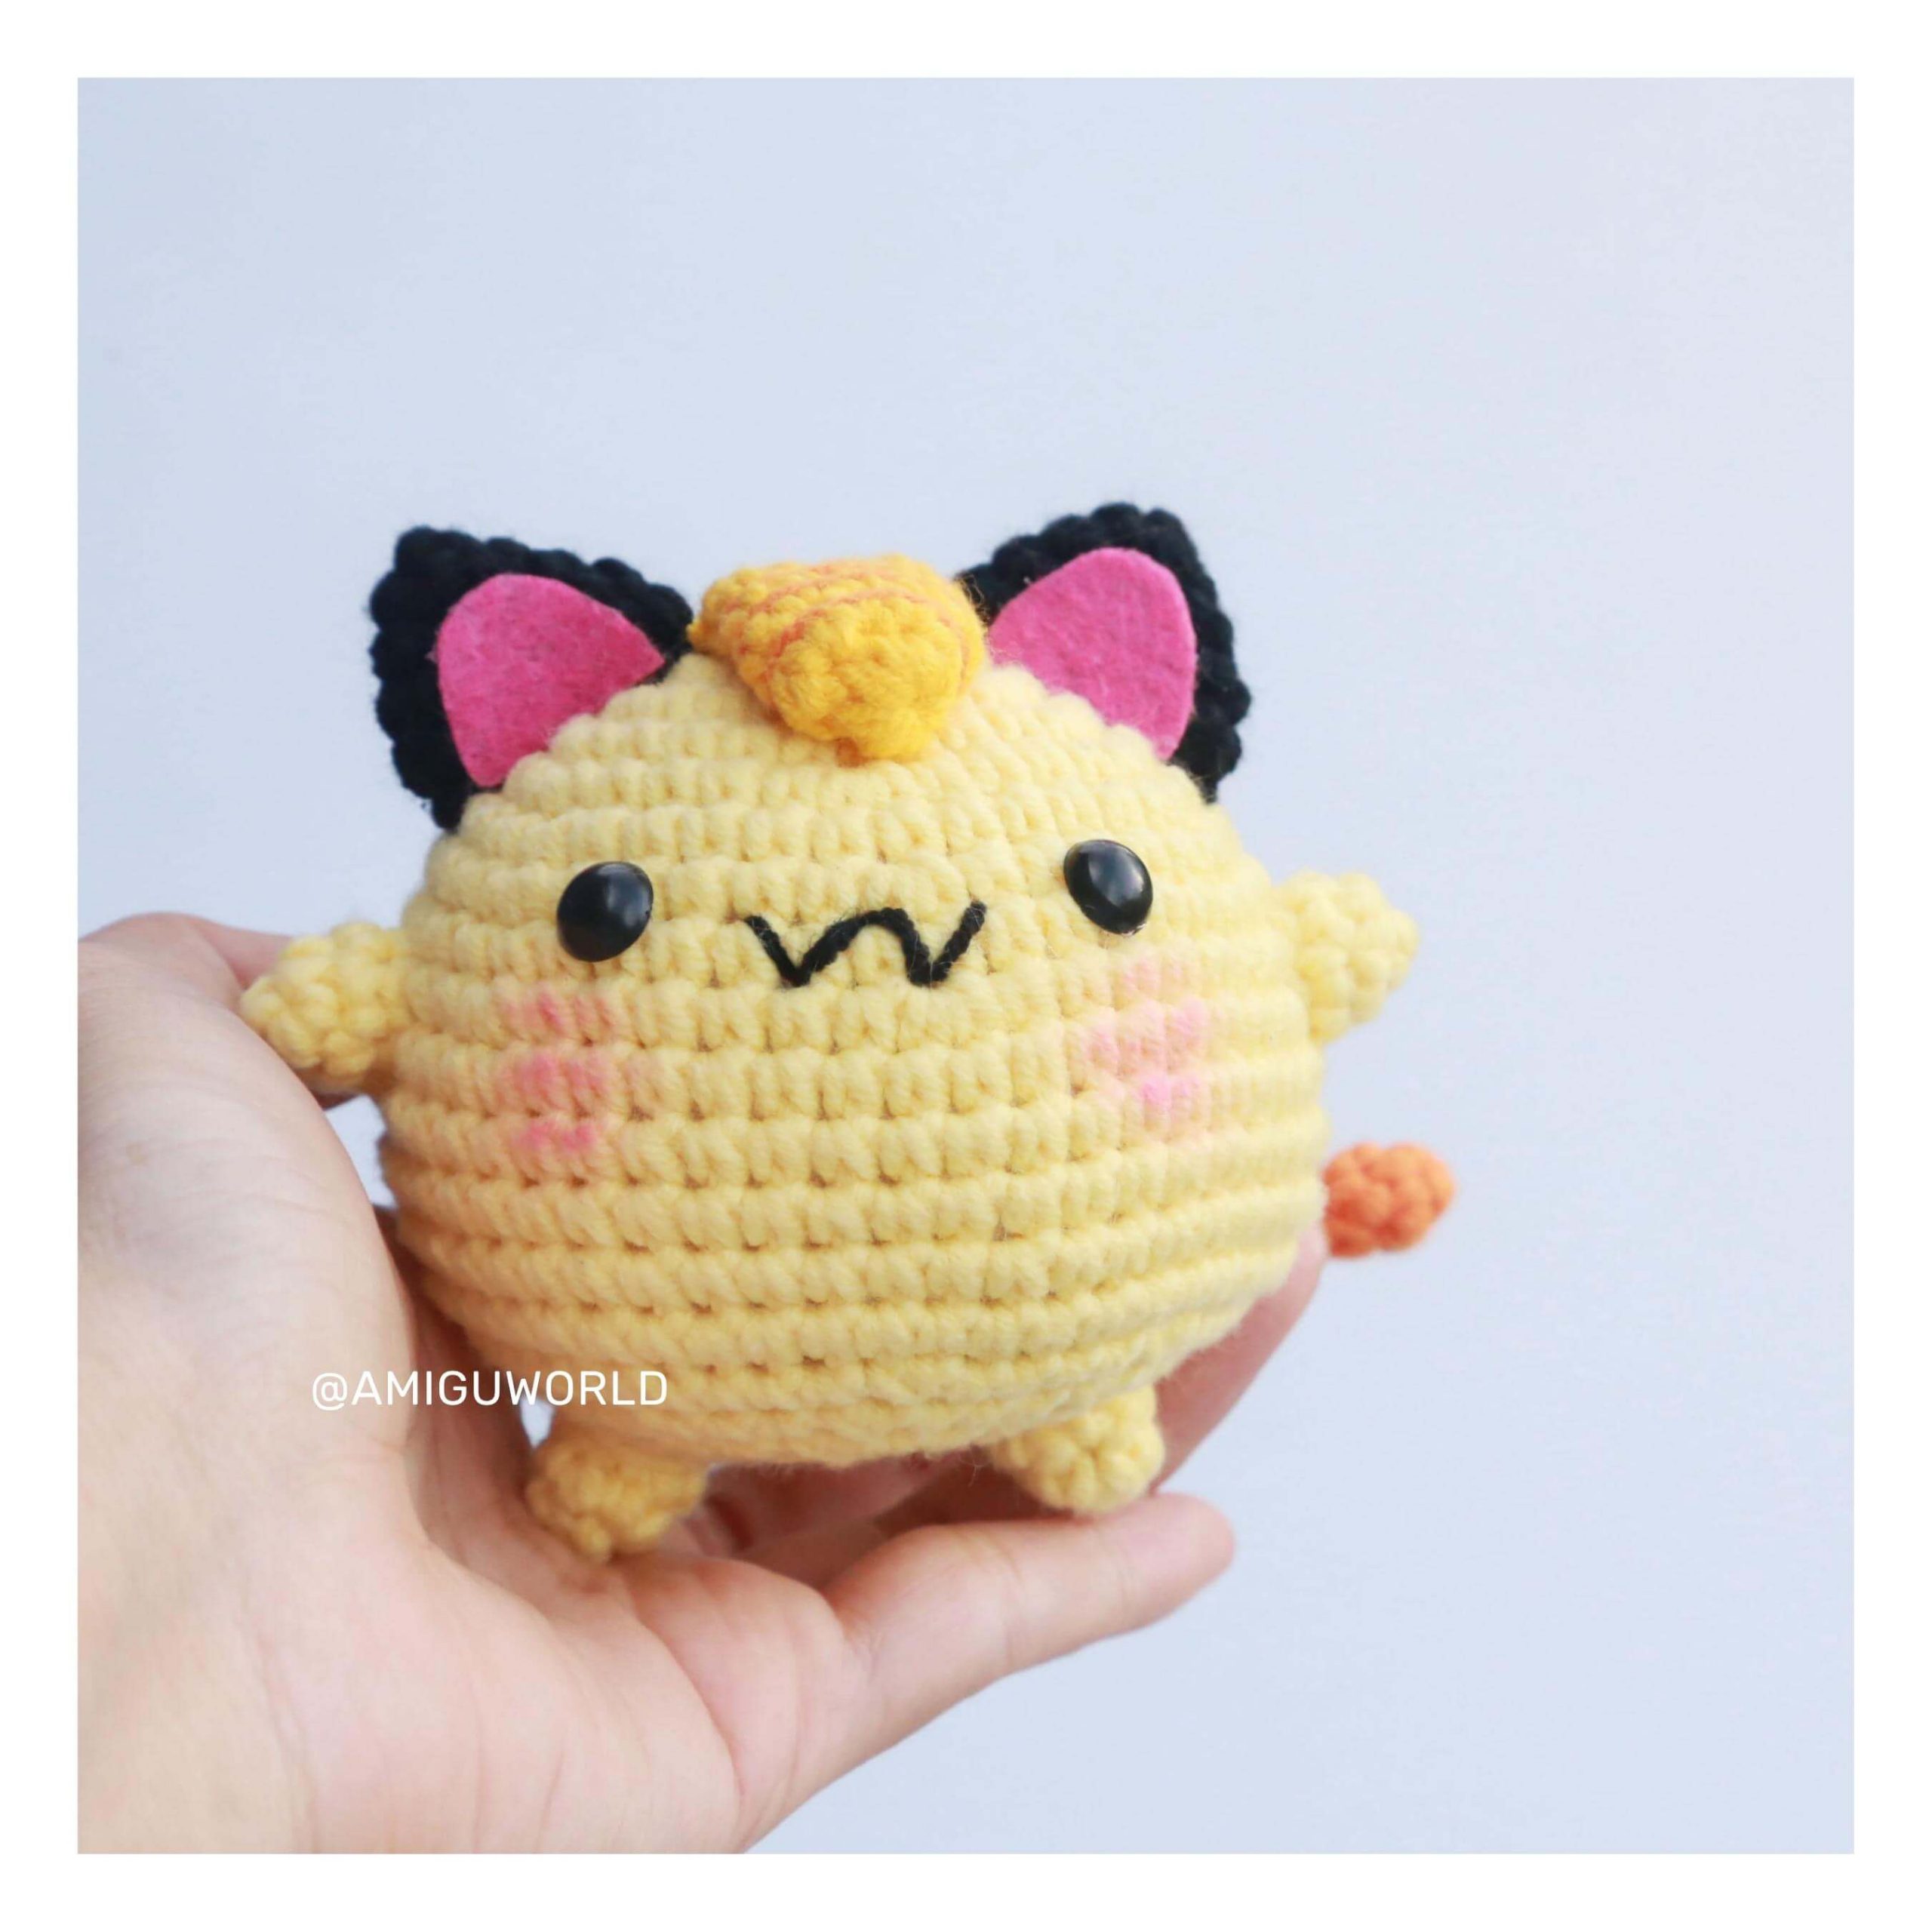 Meowth-amigurumi-crochet-pattern-by-AmiguWorld (11)